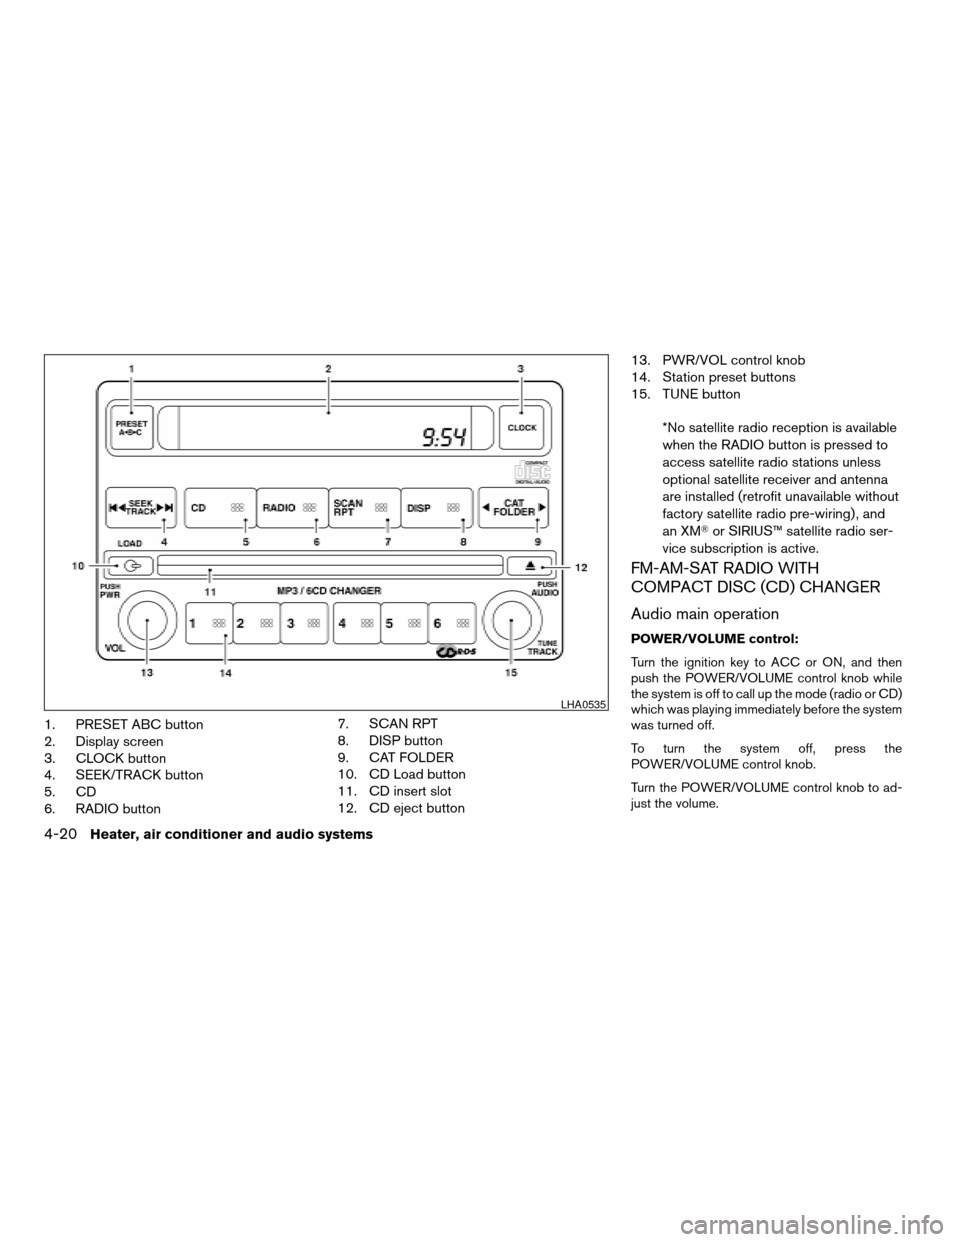 NISSAN XTERRA 2005 N50 / 2.G Owners Manual 1. PRESET ABC button
2. Display screen
3. CLOCK button
4. SEEK/TRACK button
5. CD
6. RADIO button7. SCAN RPT
8. DISP button
9. CAT FOLDER
10. CD Load button
11. CD insert slot
12. CD eject button13. P